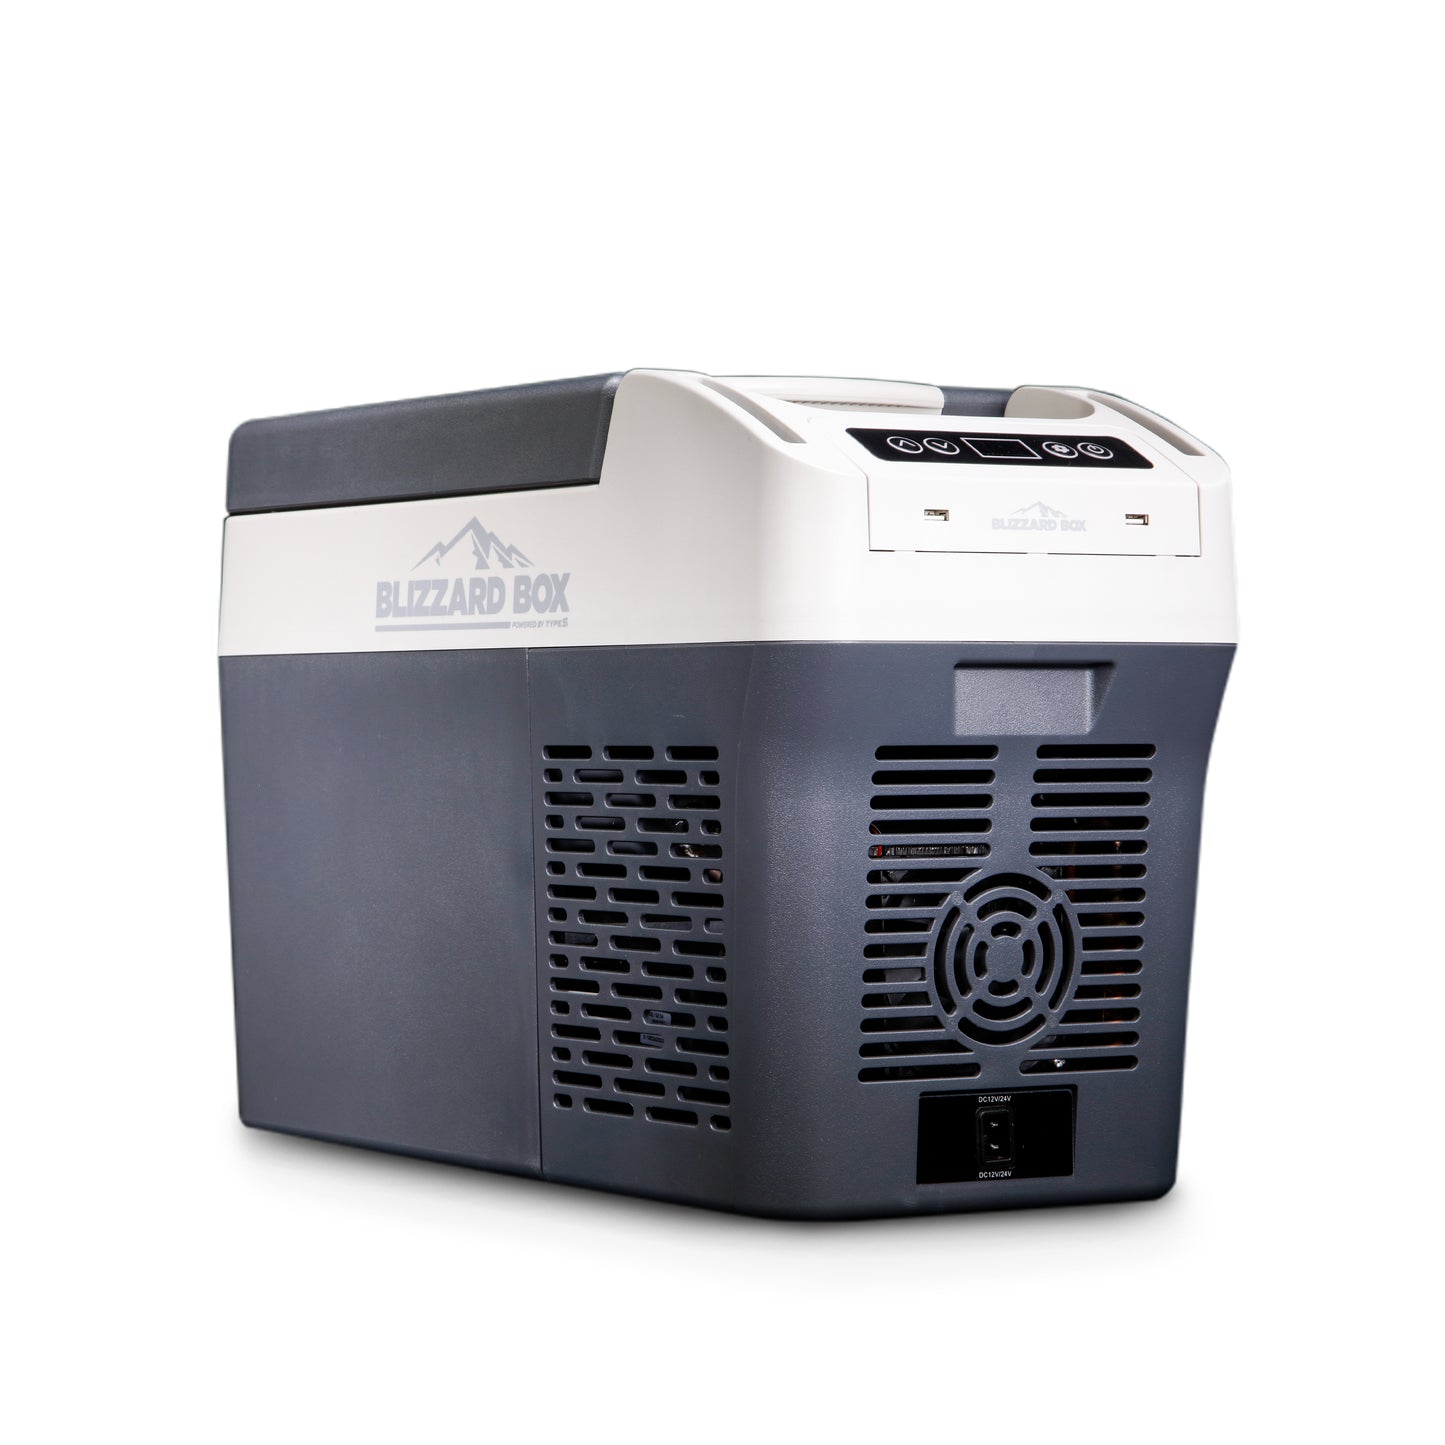 PROJECT X - AC532650-1 - Refrigerator - Blizzard Box - 12QT/12L Electric Portable Fridge / Freezer - P/N: AC532650-1